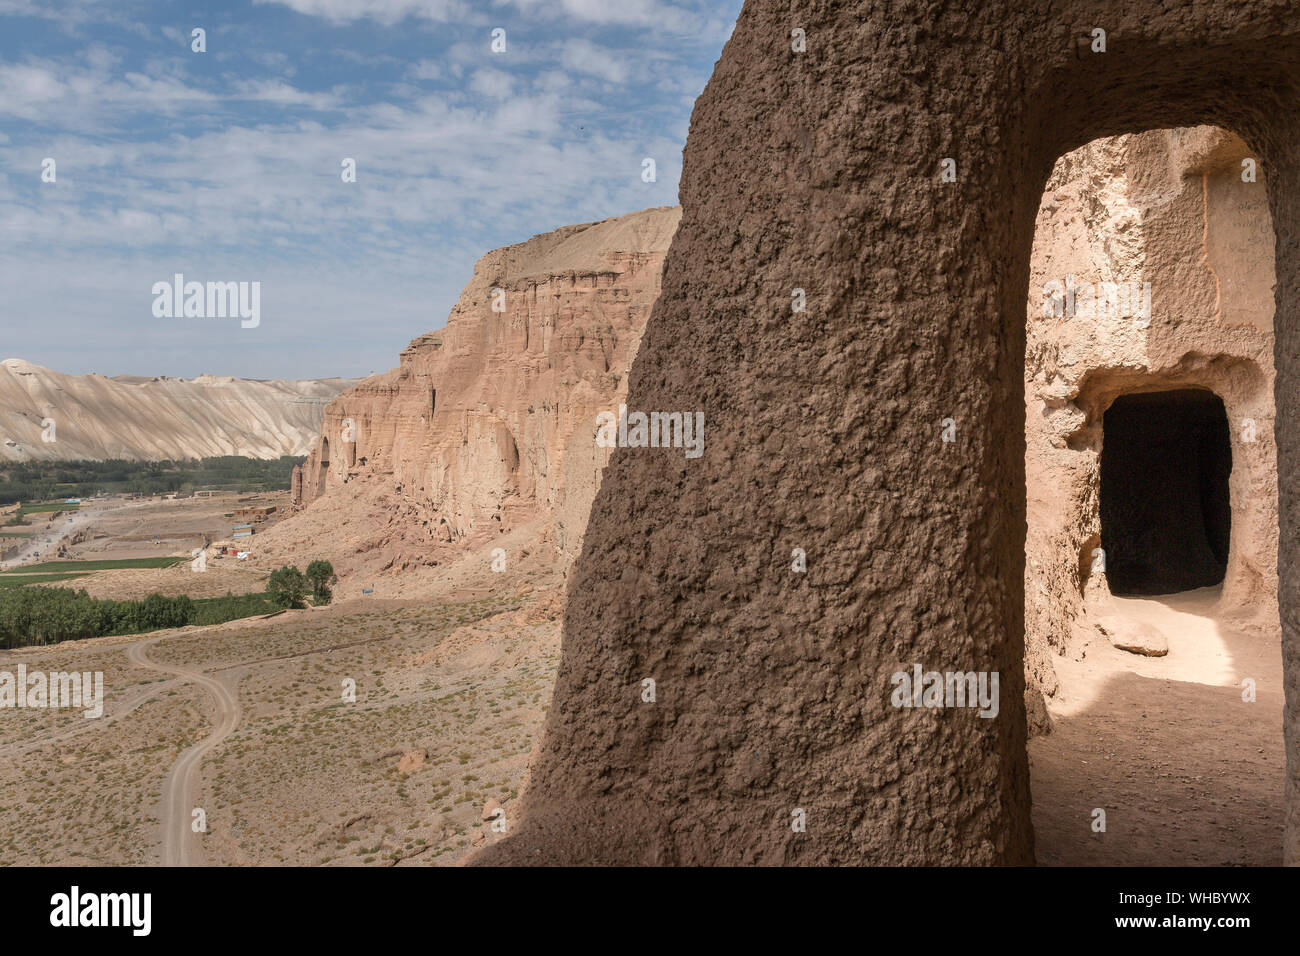 Vista della Valle di Bamiyan, Afghanistan Foto Stock